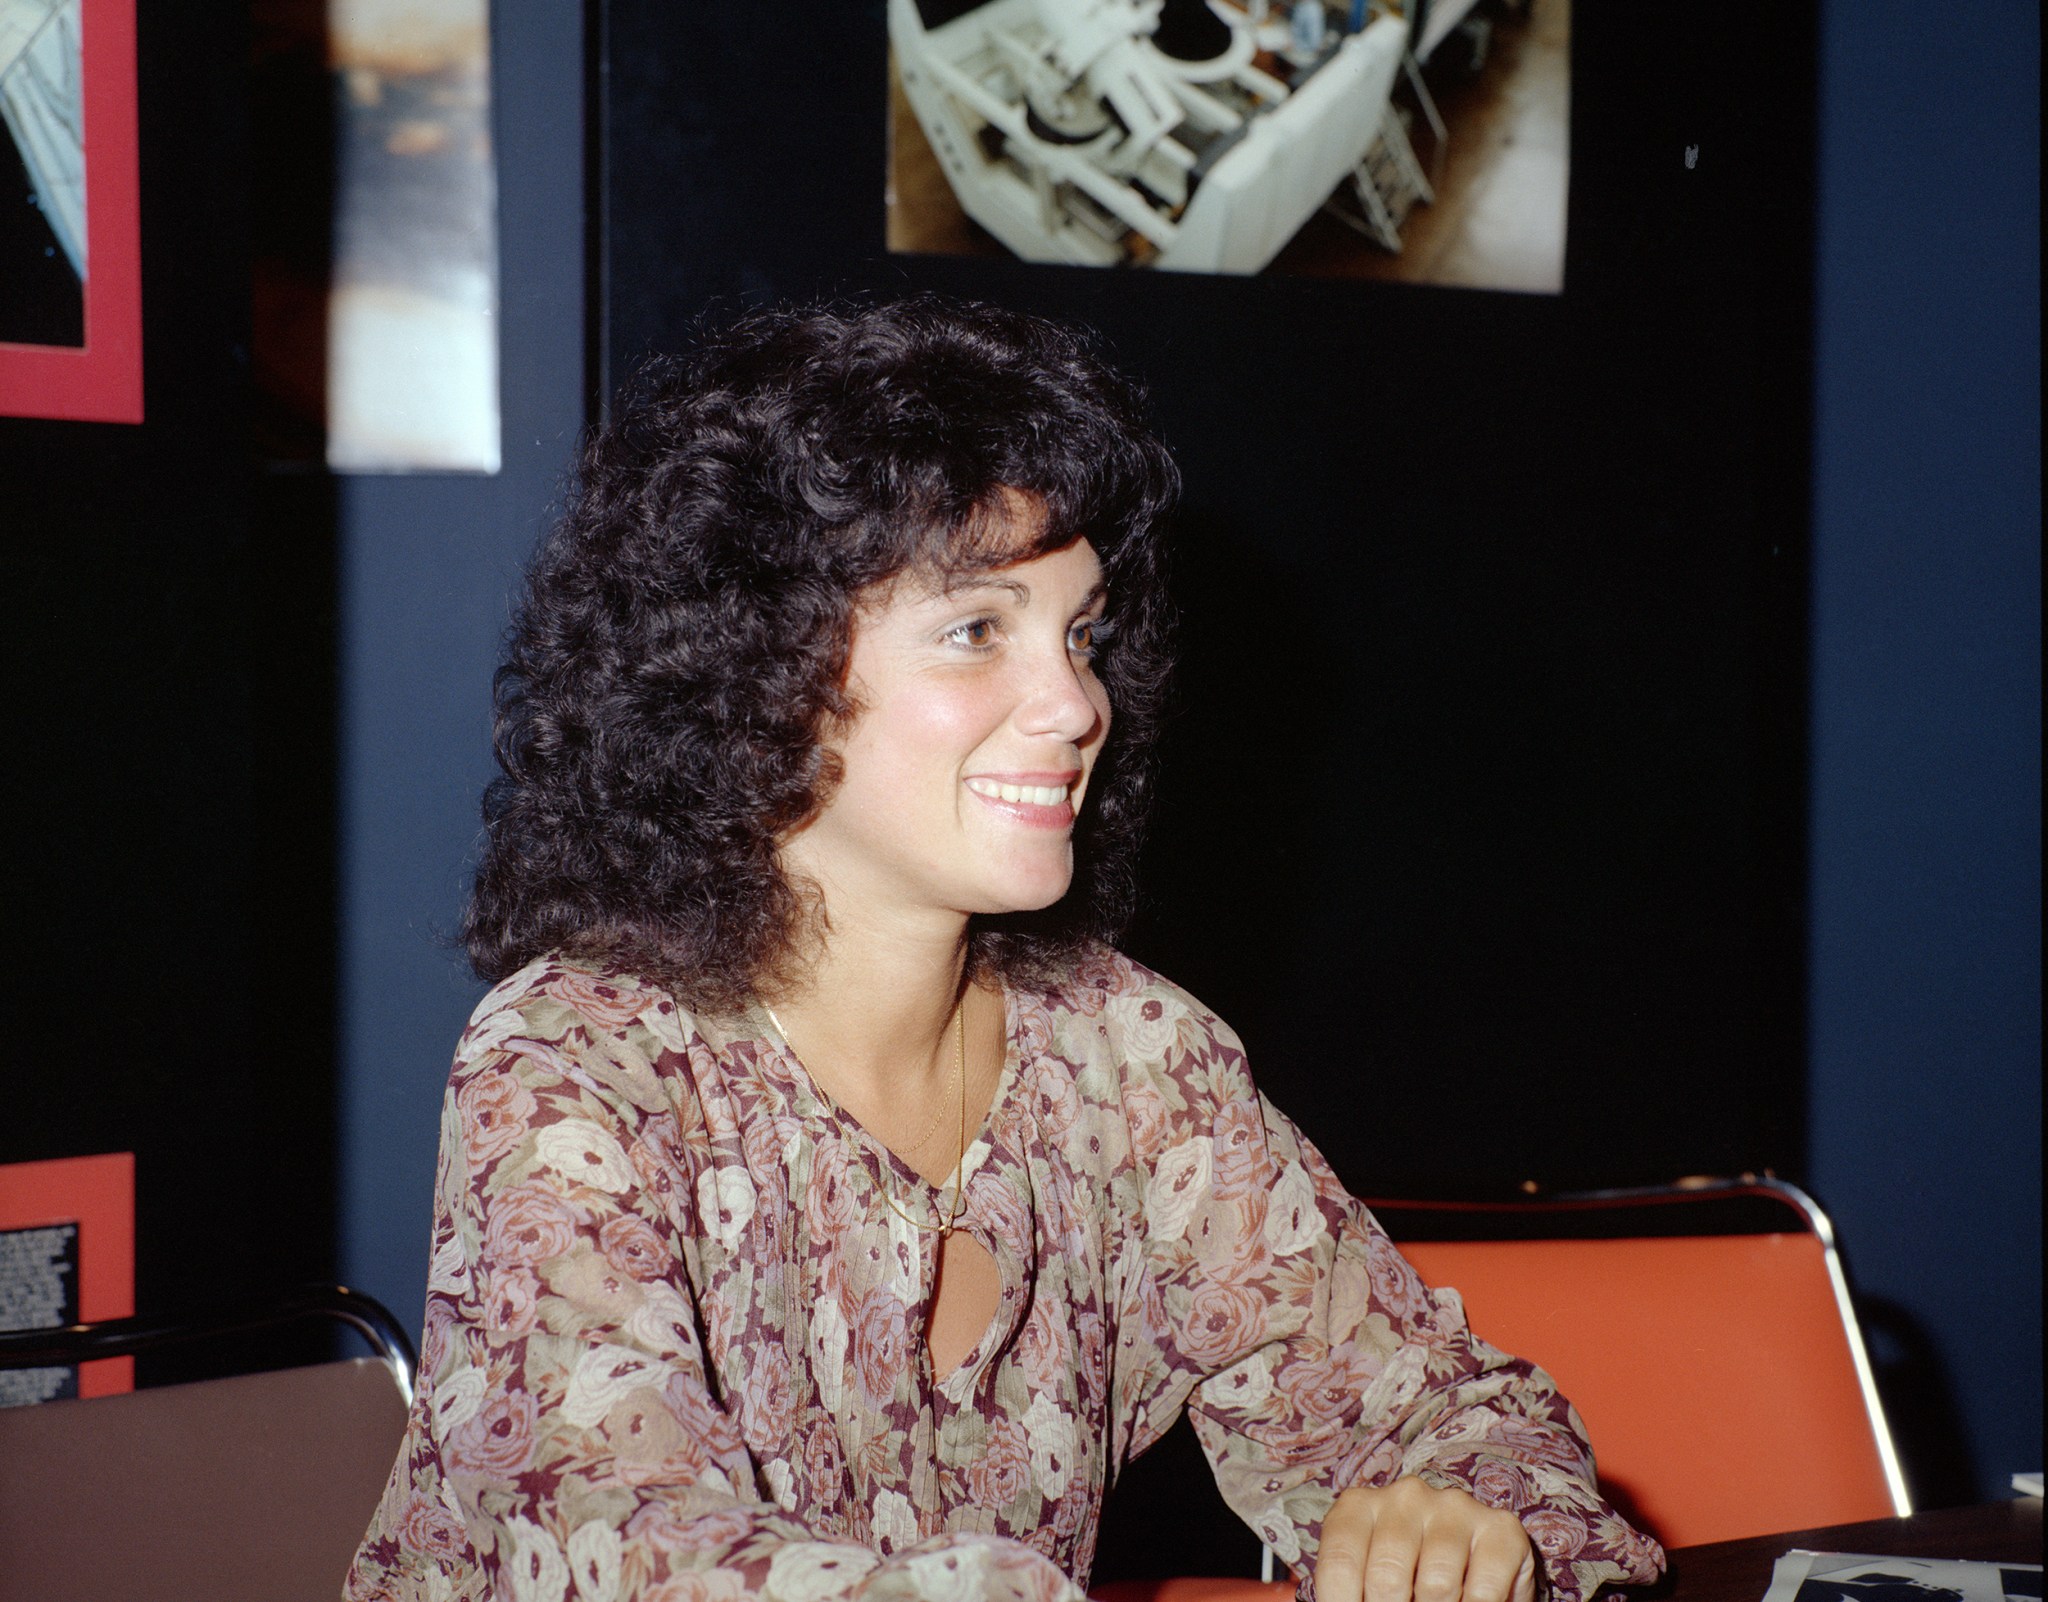 Profile photo of Judy Resnik looking up at visitor.